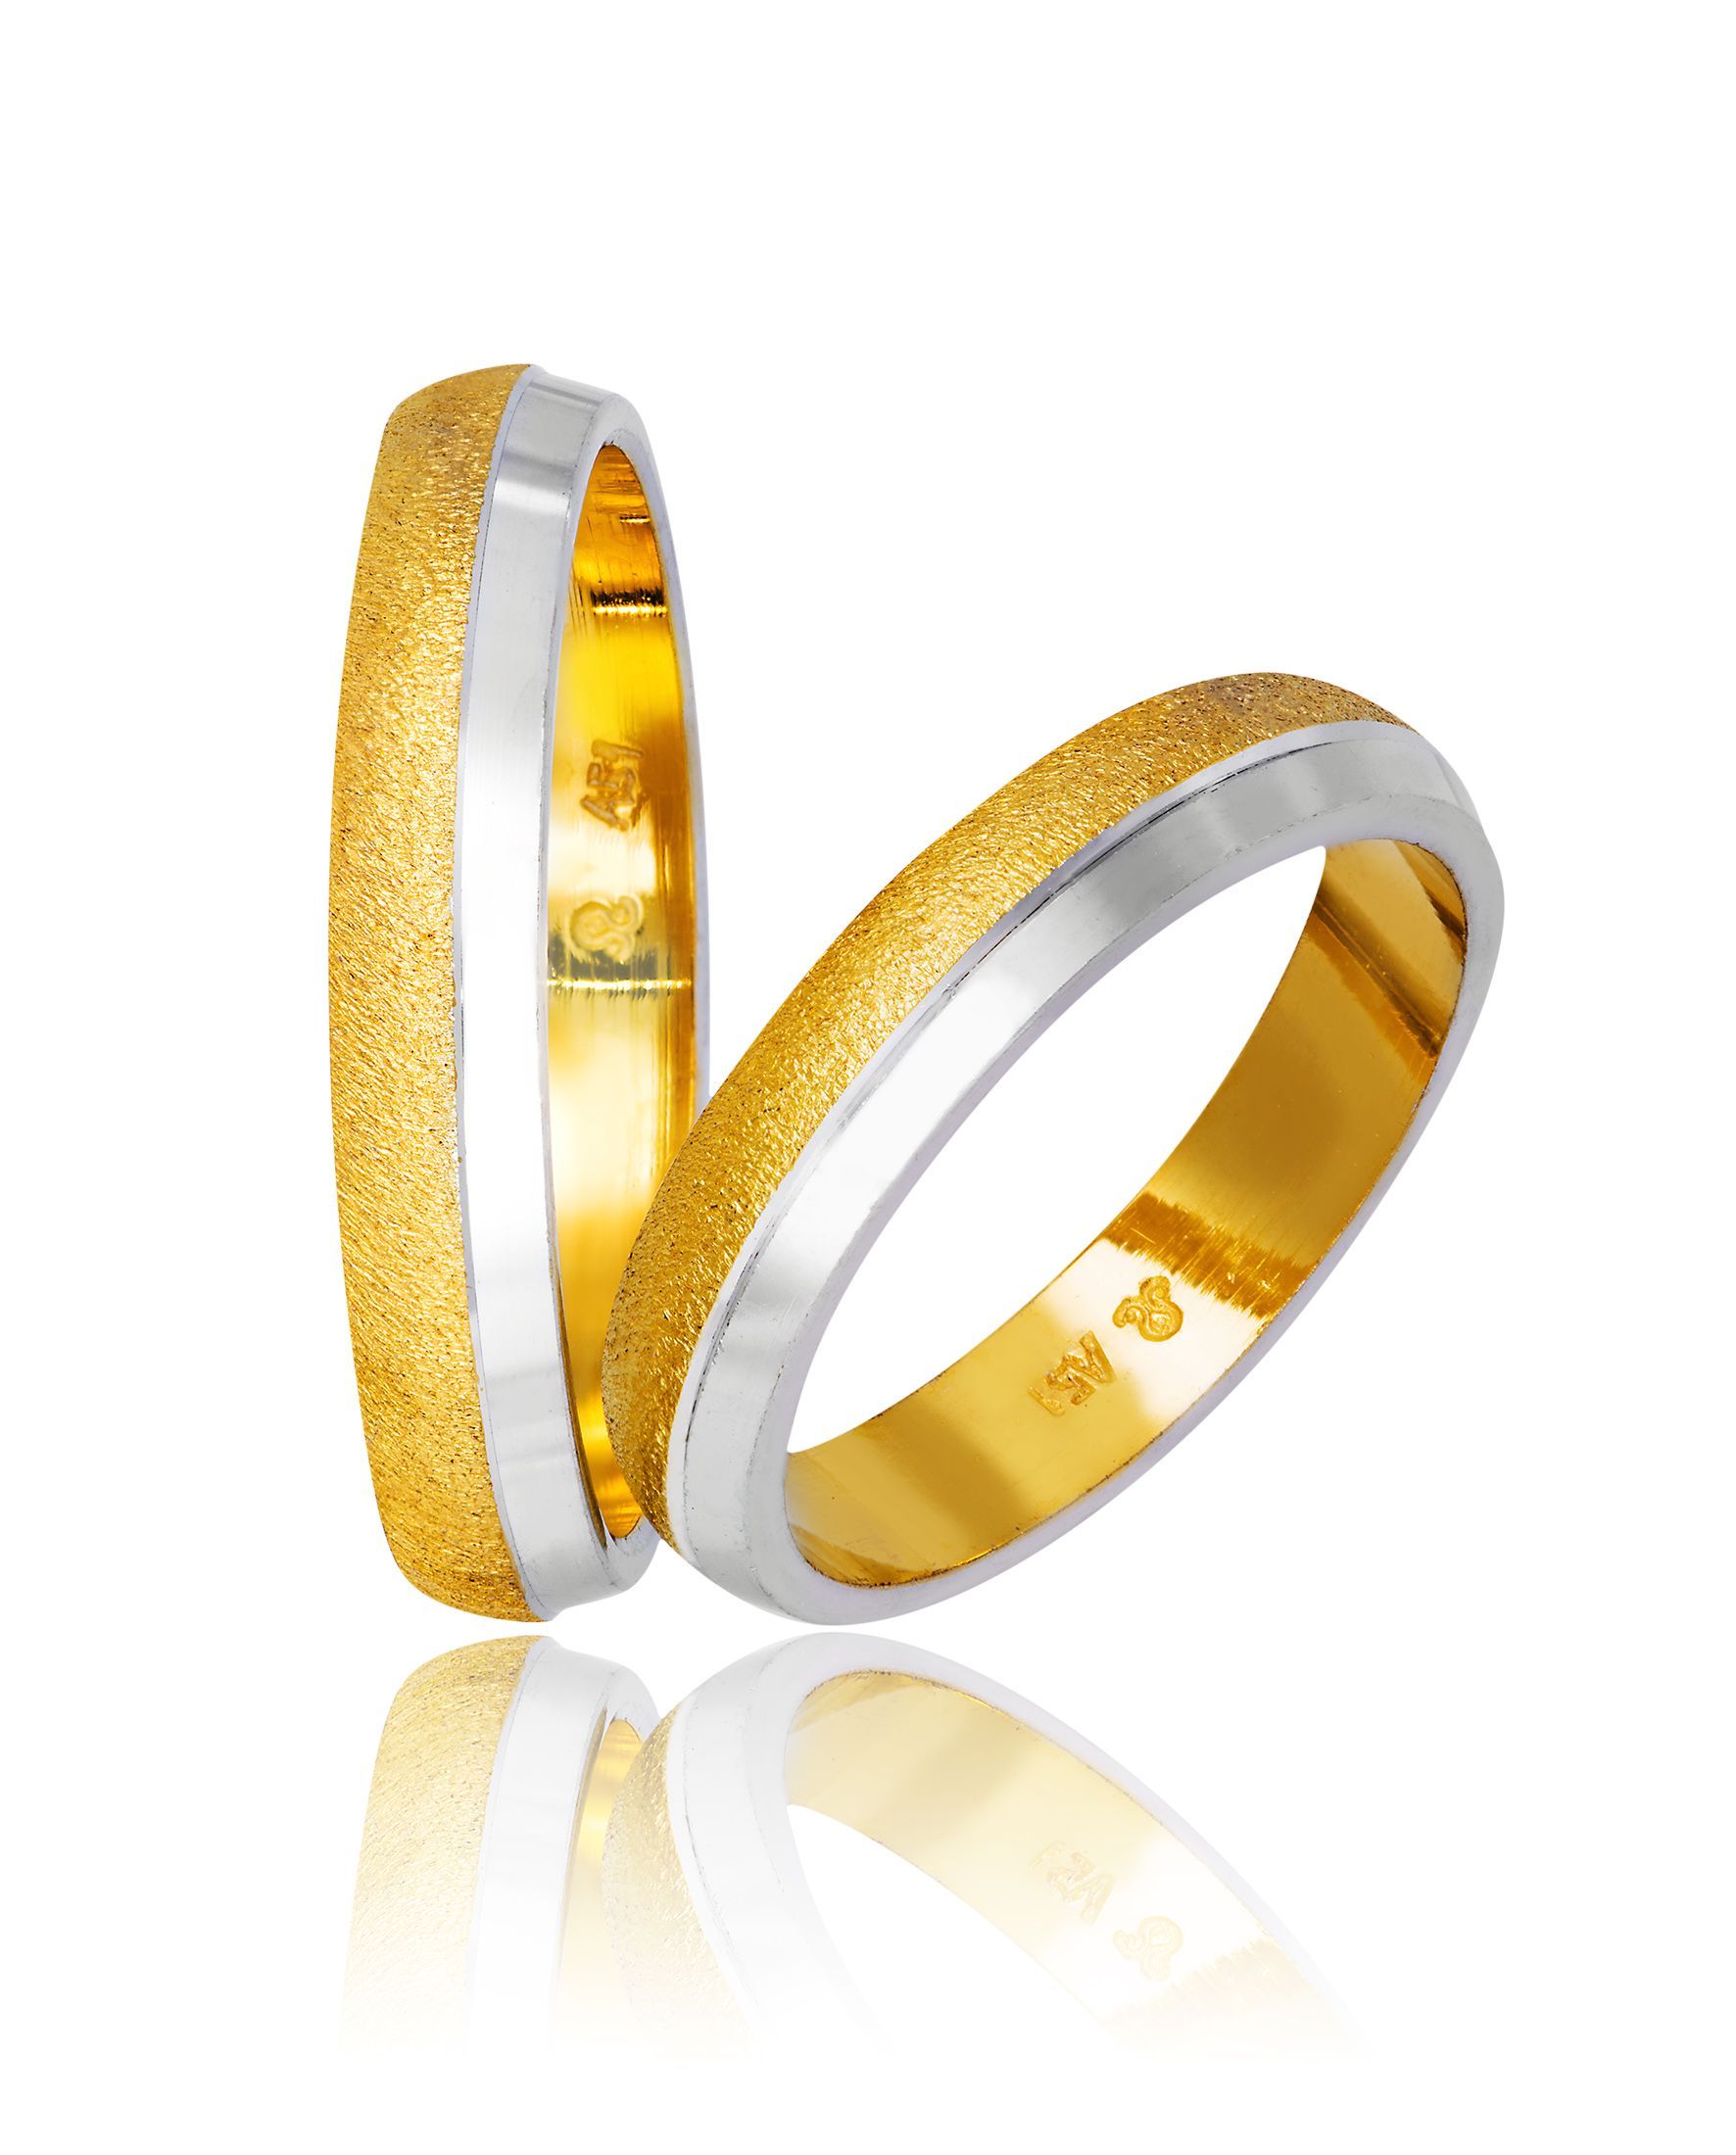 White gold & gold wedding rings 4mm (code743)